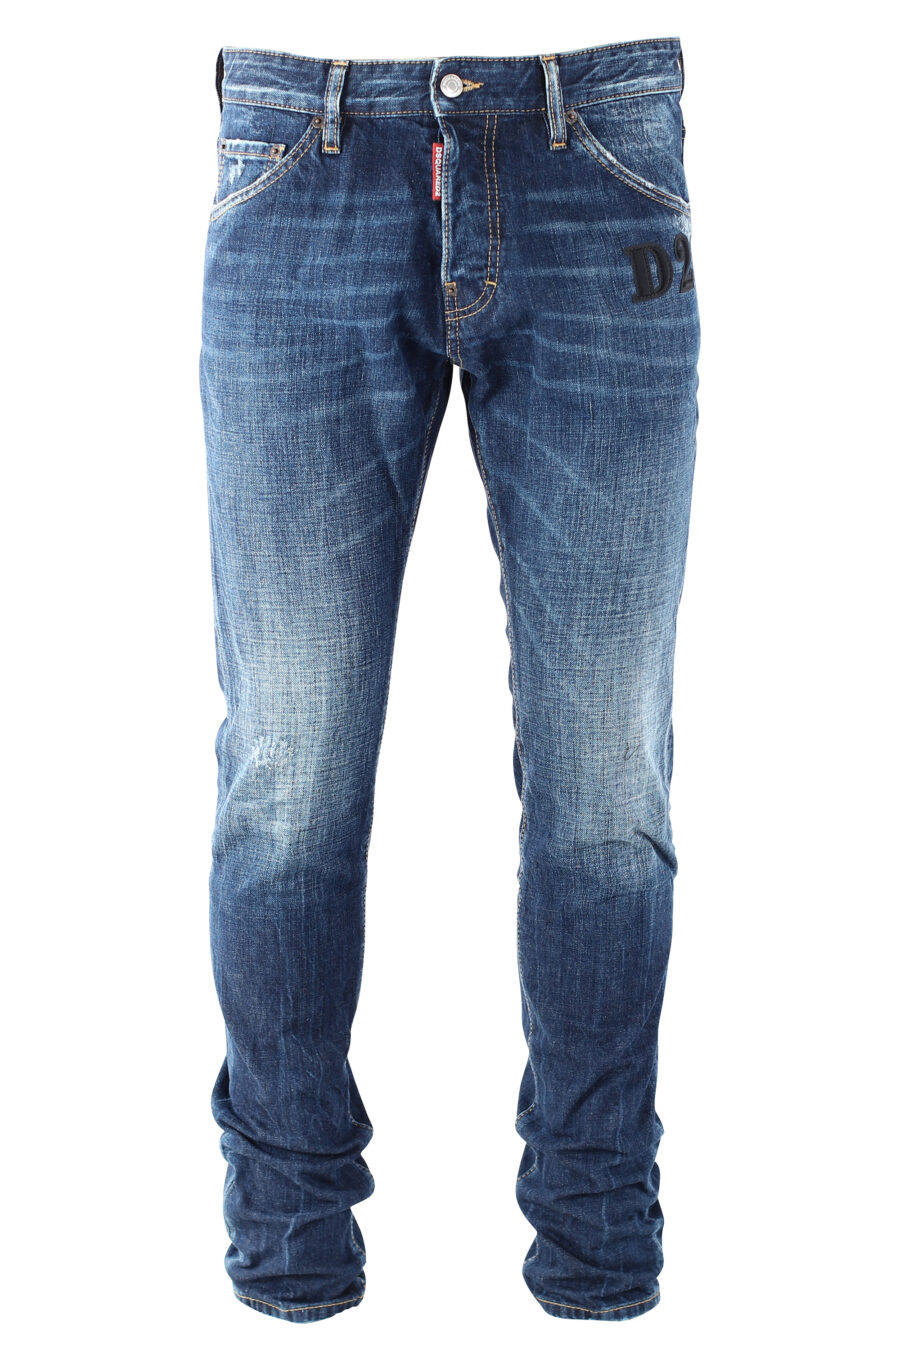 Jeans "cool guy jean" bleu avec logo "D2" noir - IMG 9686